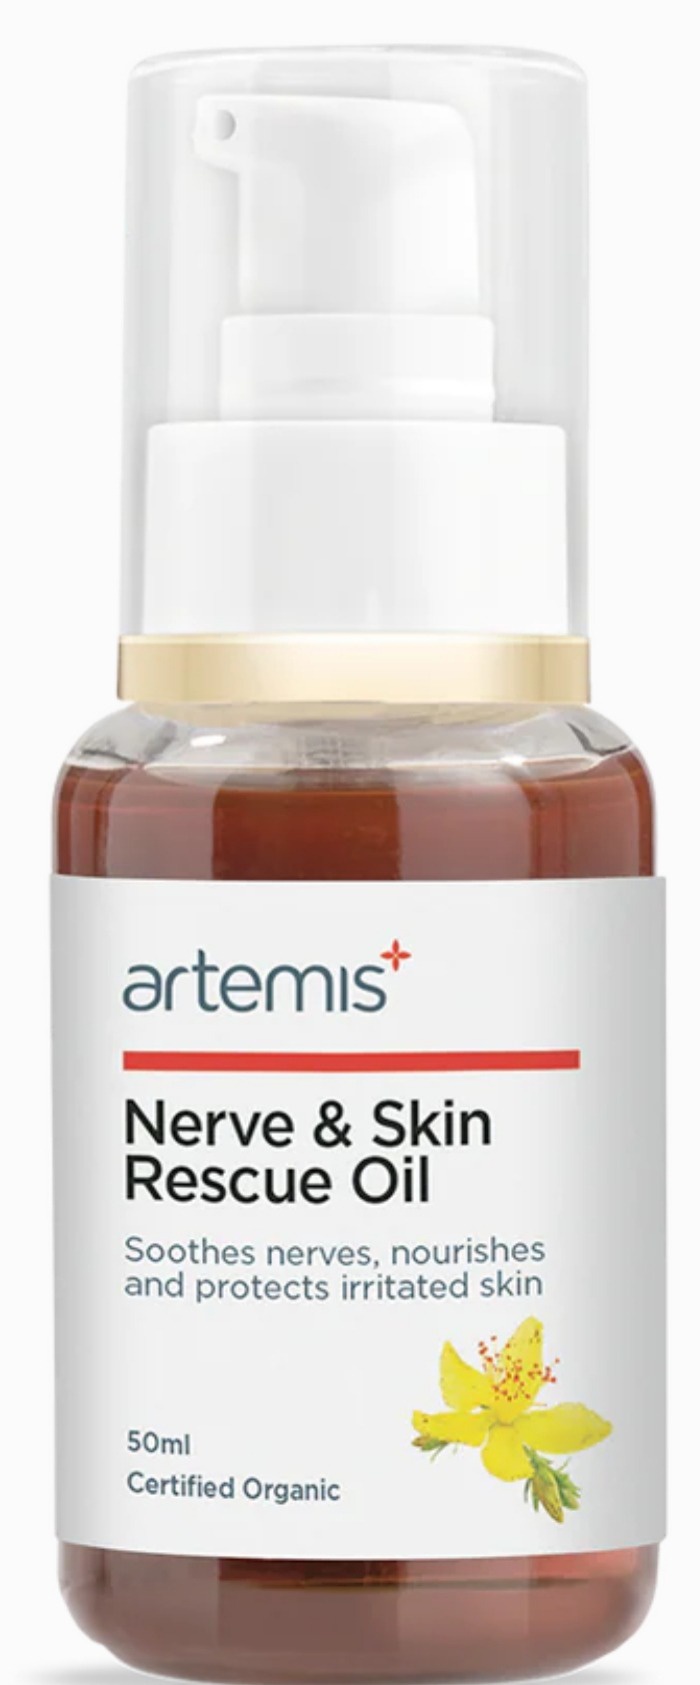 Artemis Nerve & Skin Rescue Oil